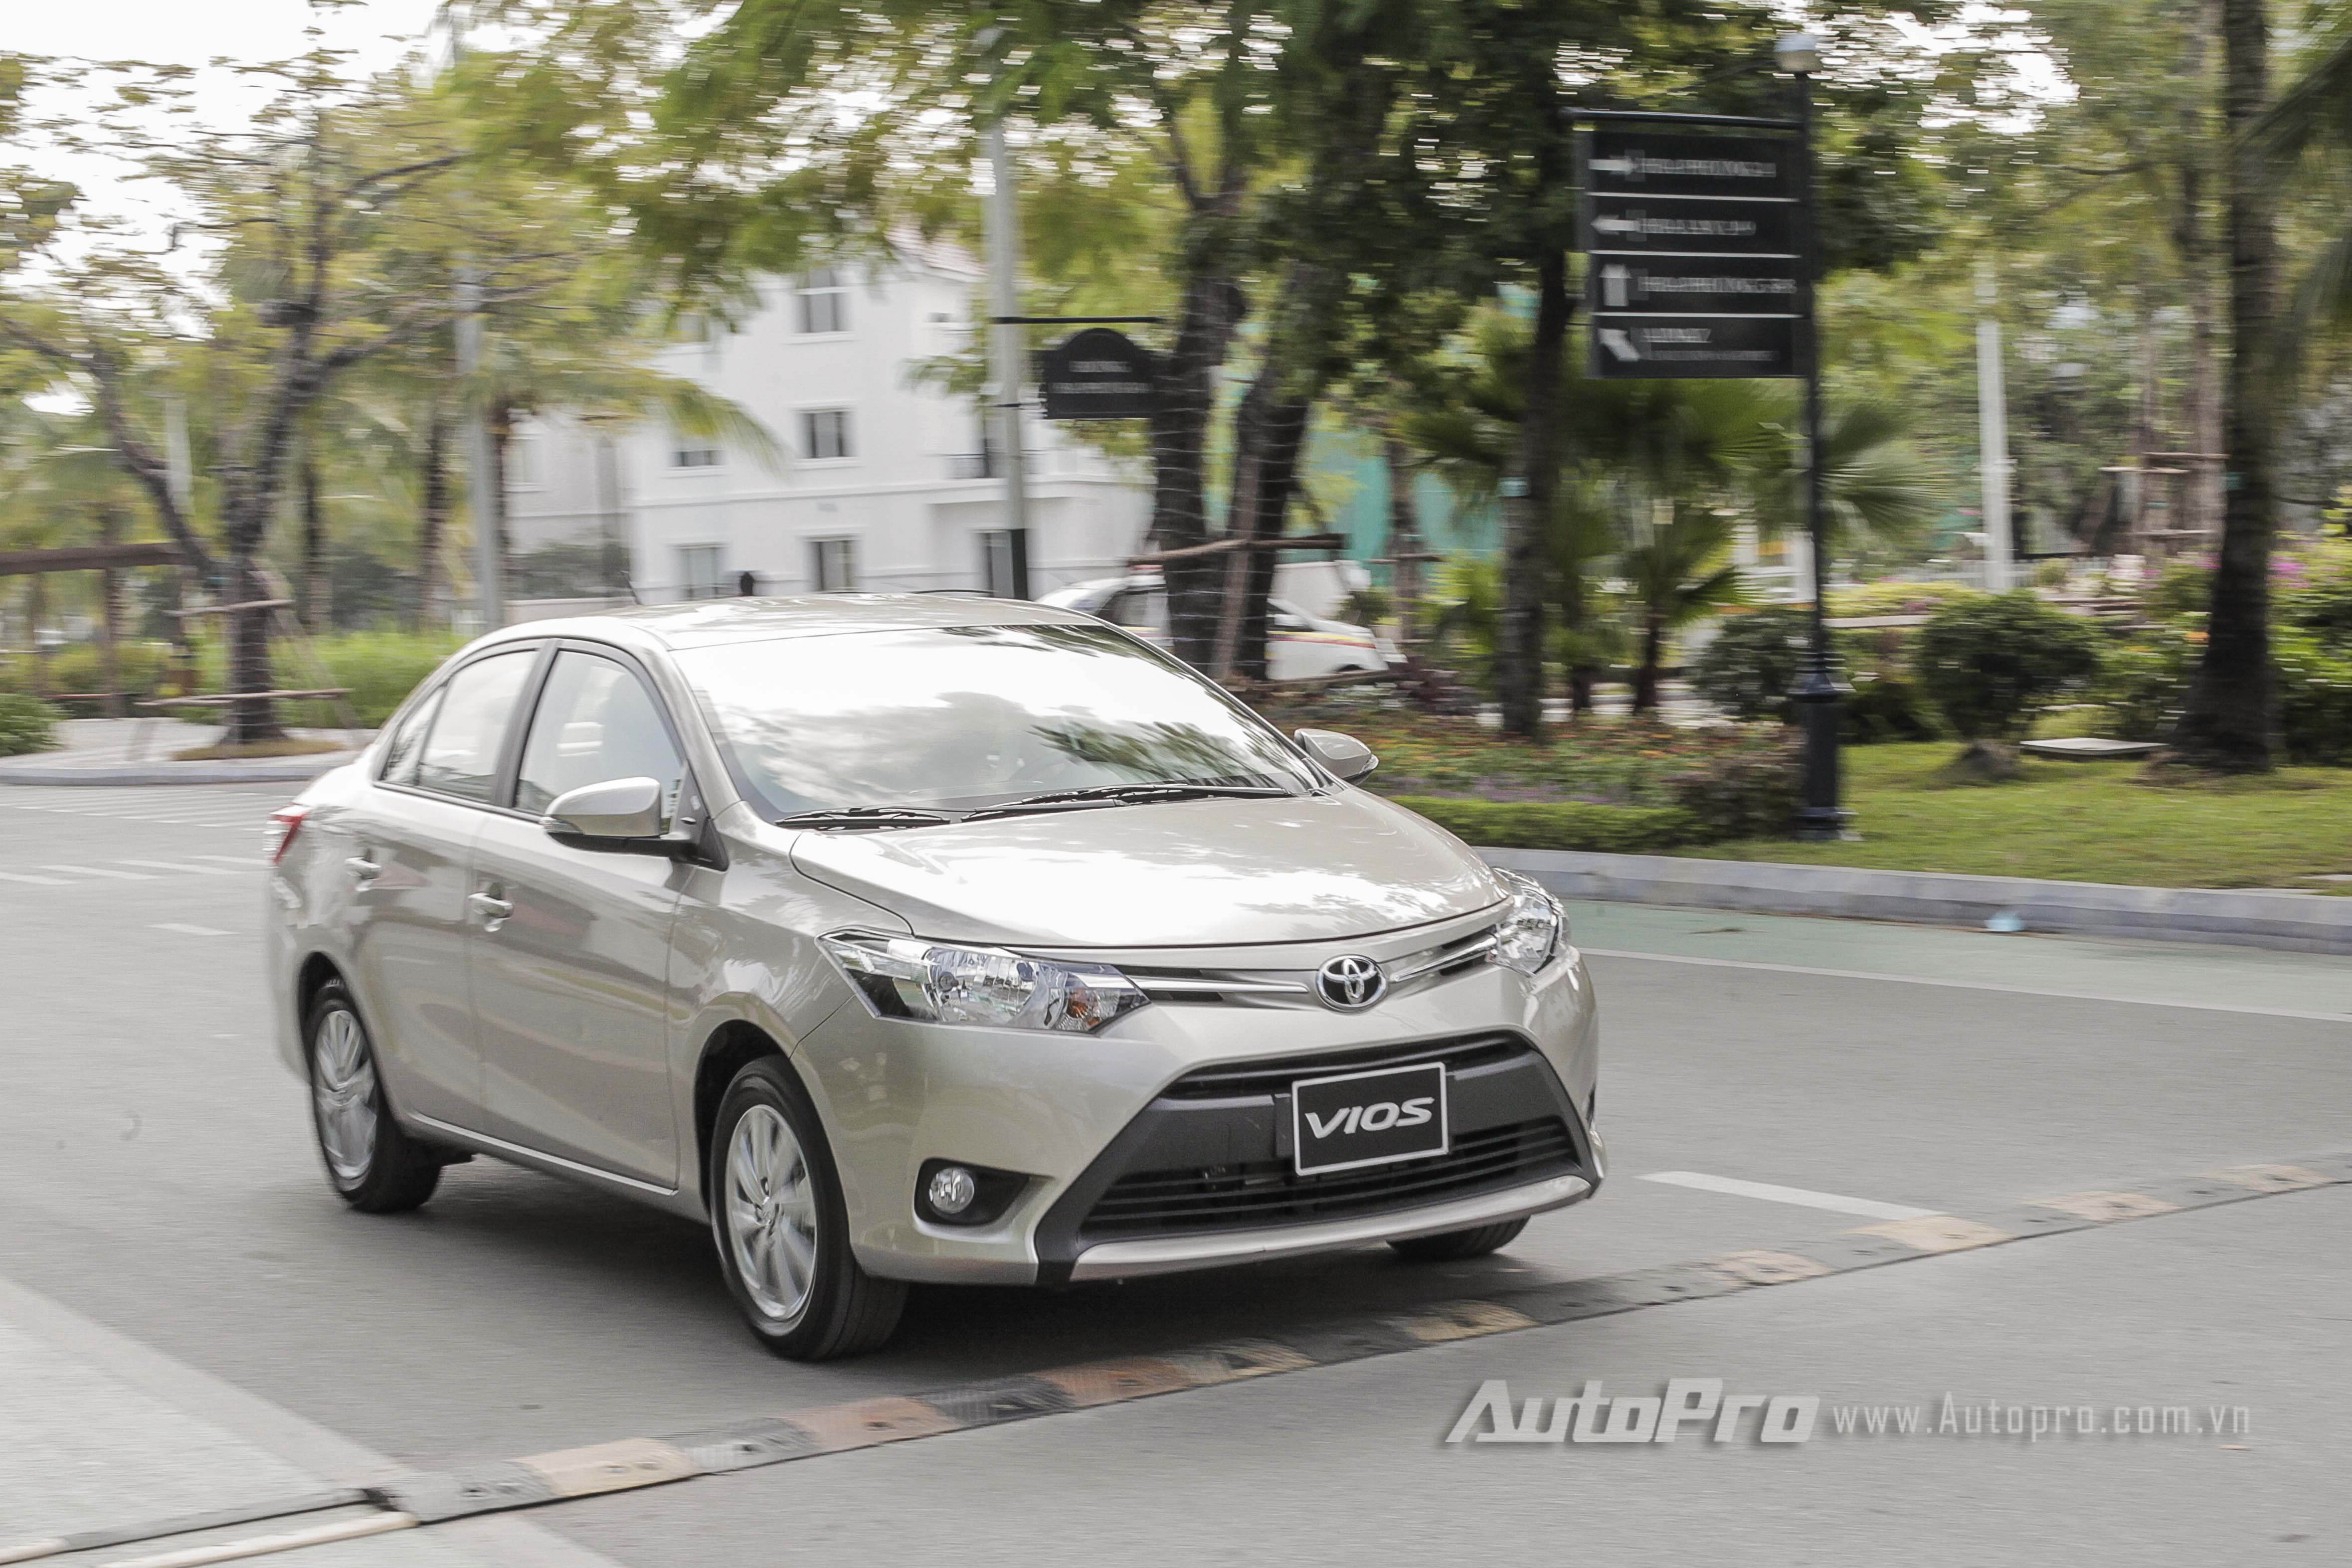 Toyota Vios 2016 ra mắt tại Malaysia  CafeAutoVn